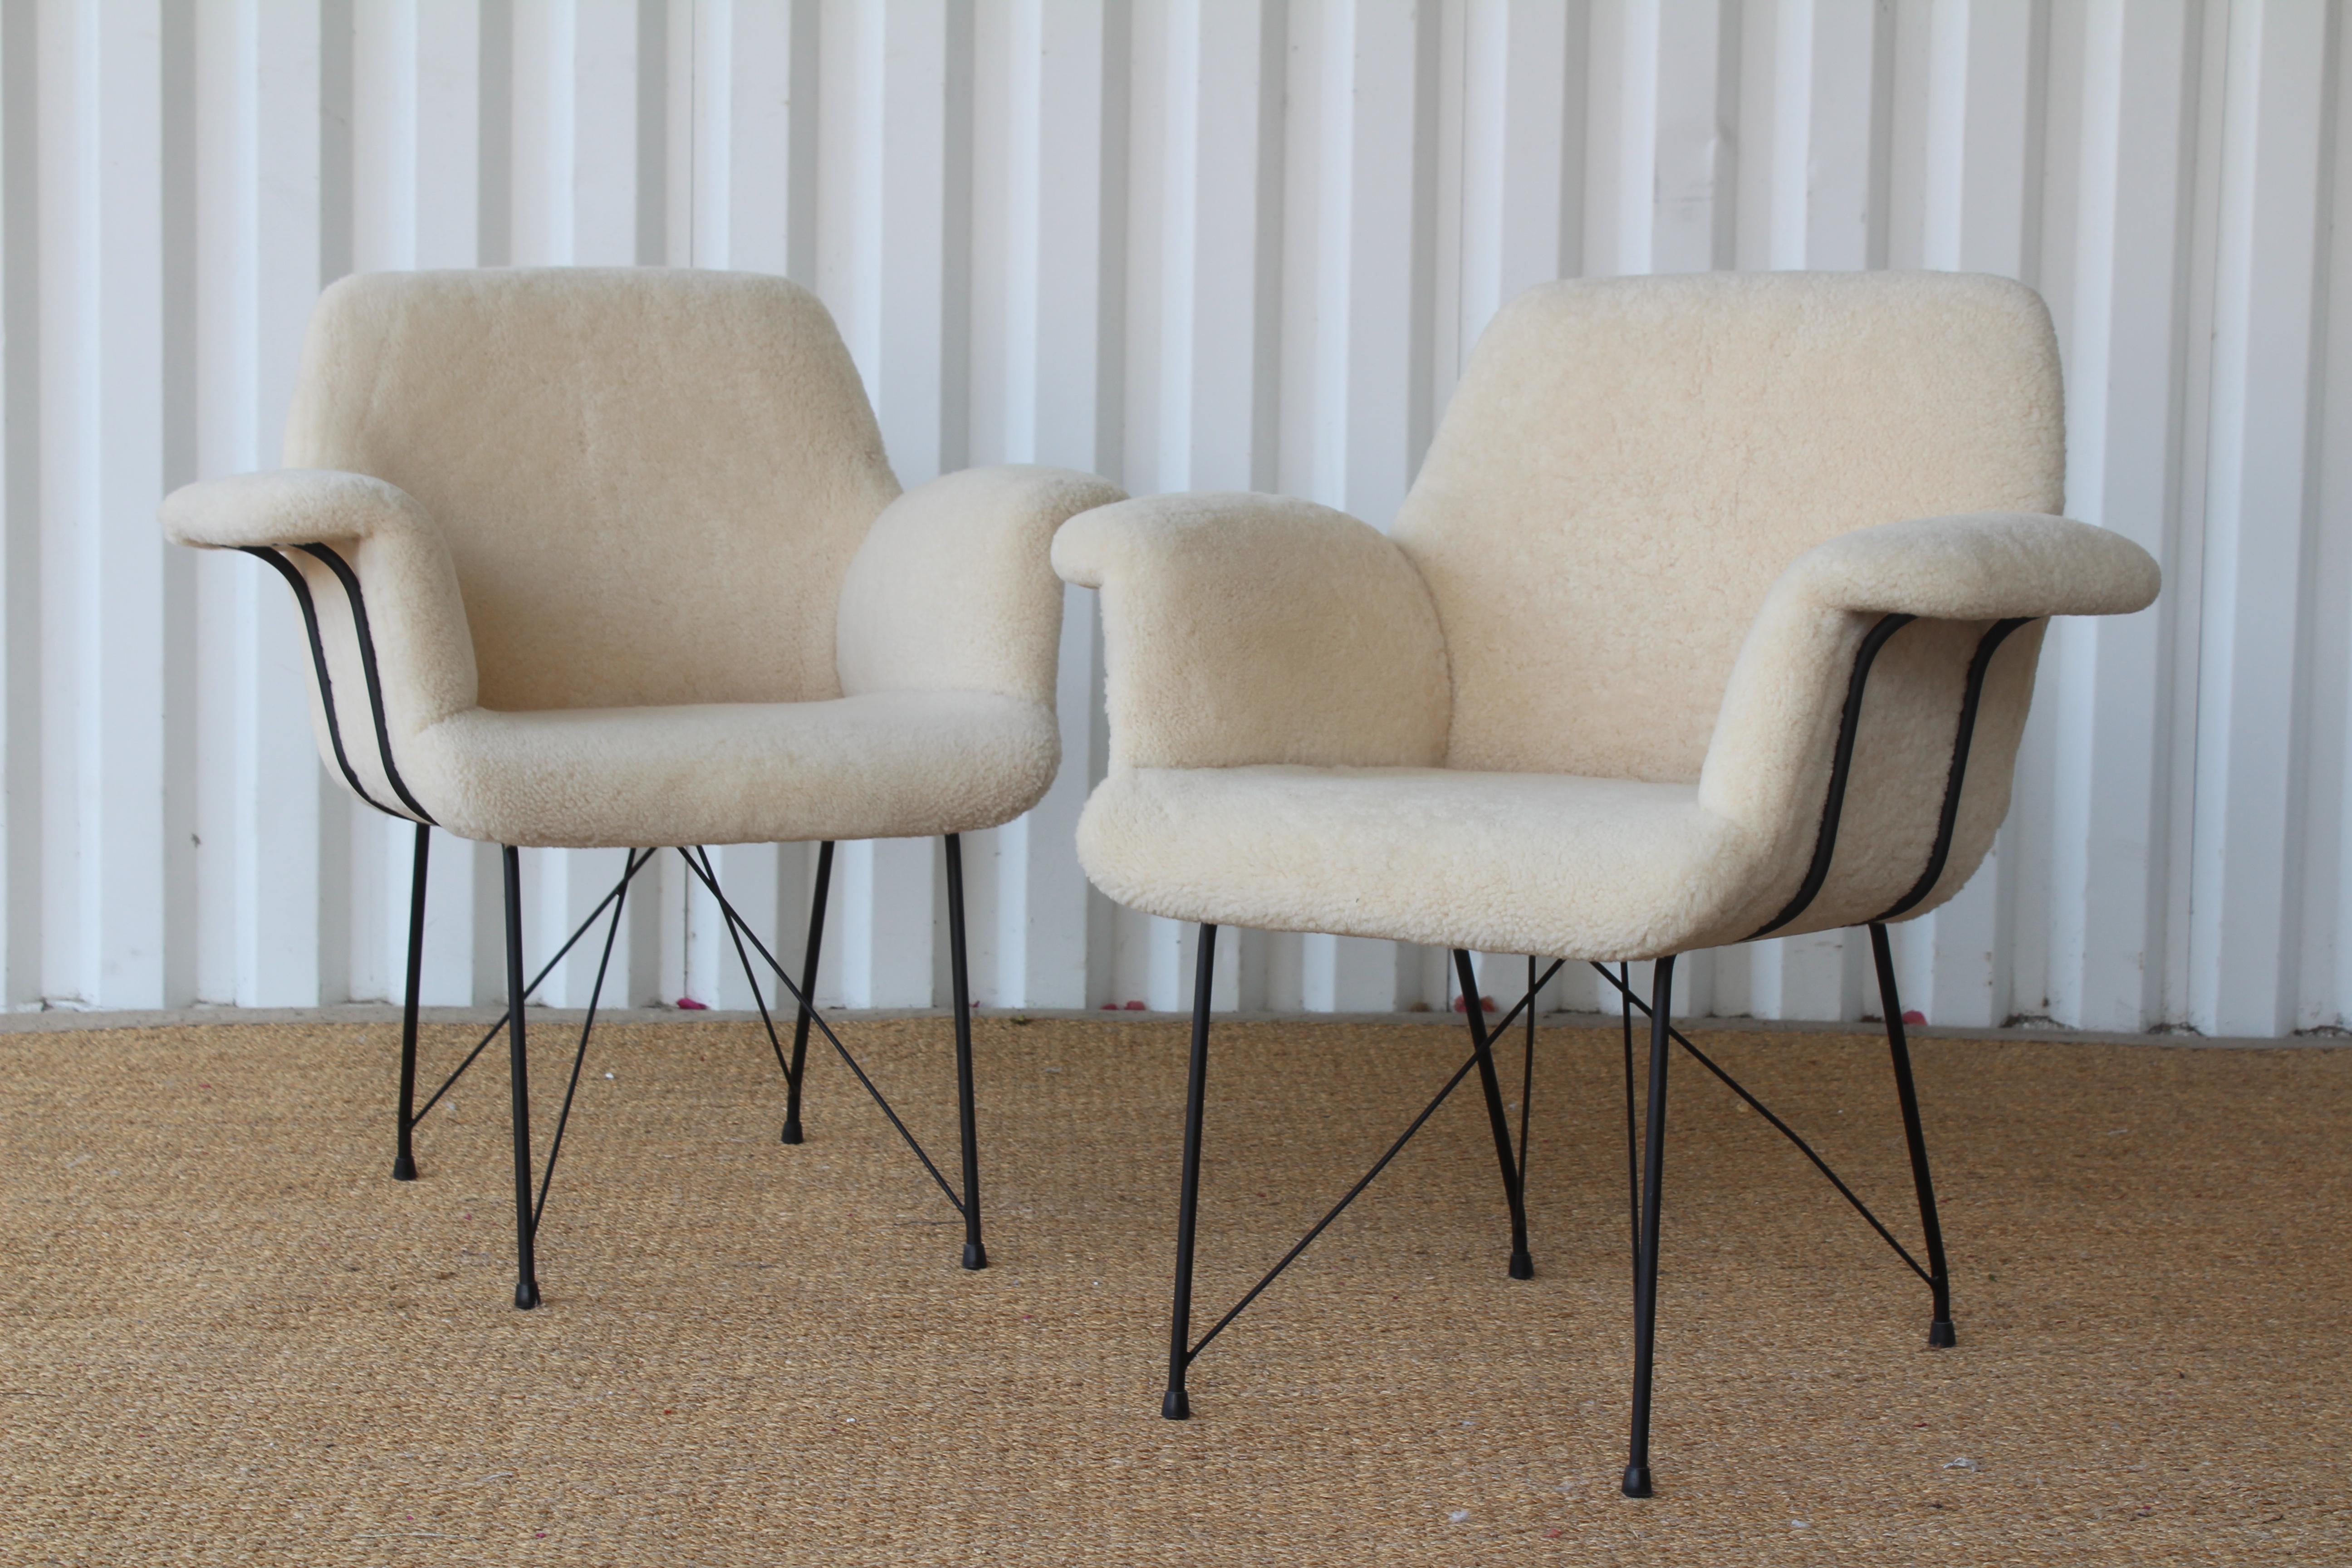 Powder-Coated Pair of Brazilian Modern Chairs by Carlo Hauner and Martin Eisler, 1955